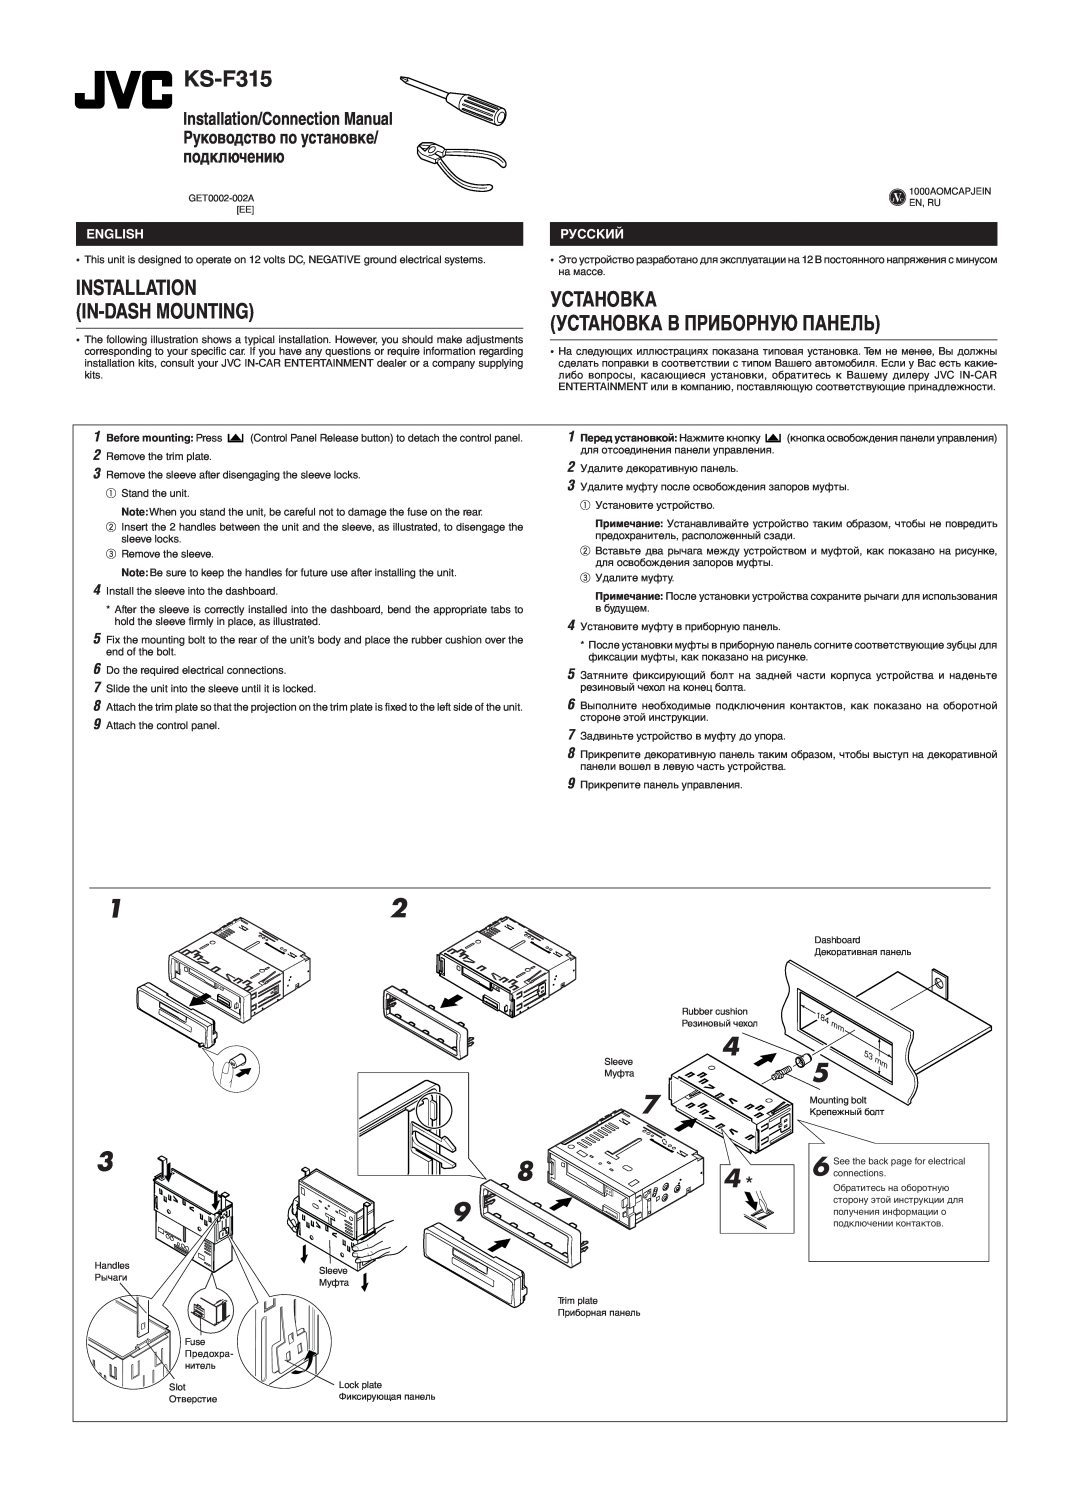 JVC KS-F315EE manual Установка Установка В Приборную Панель, Installation In-Dashmounting, English, Русский 